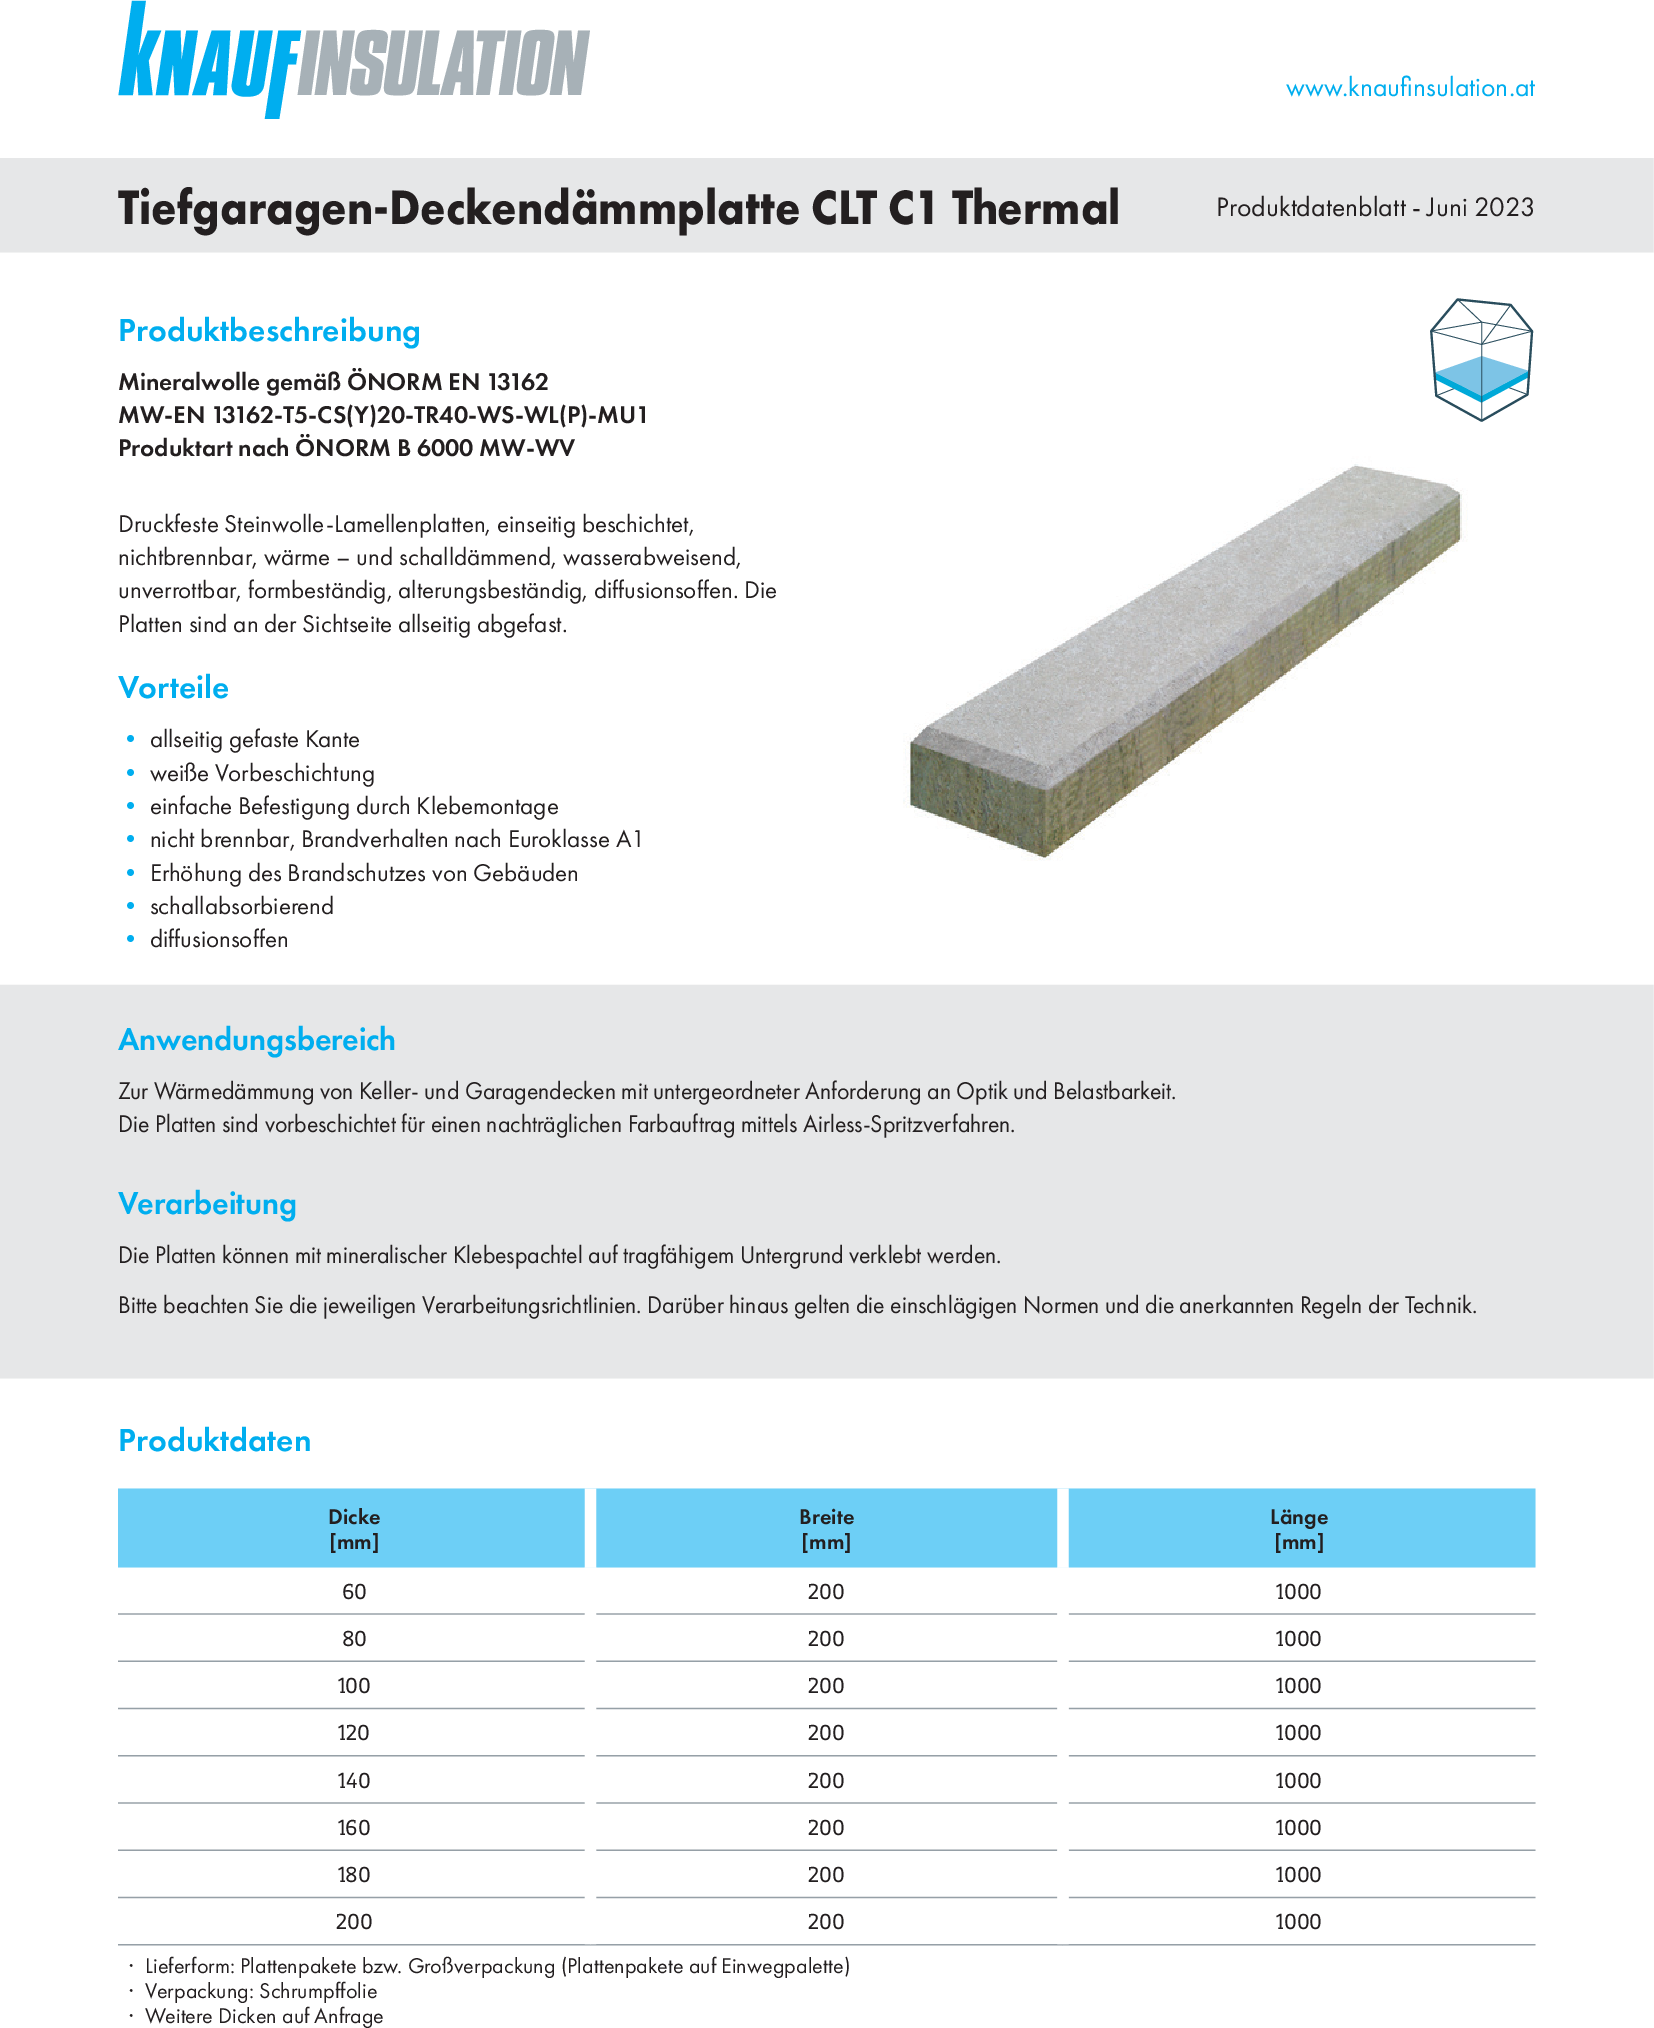 Tiefgaragen-Deckendämmplatte CLT C1 Thermal, Produktdatenblatt